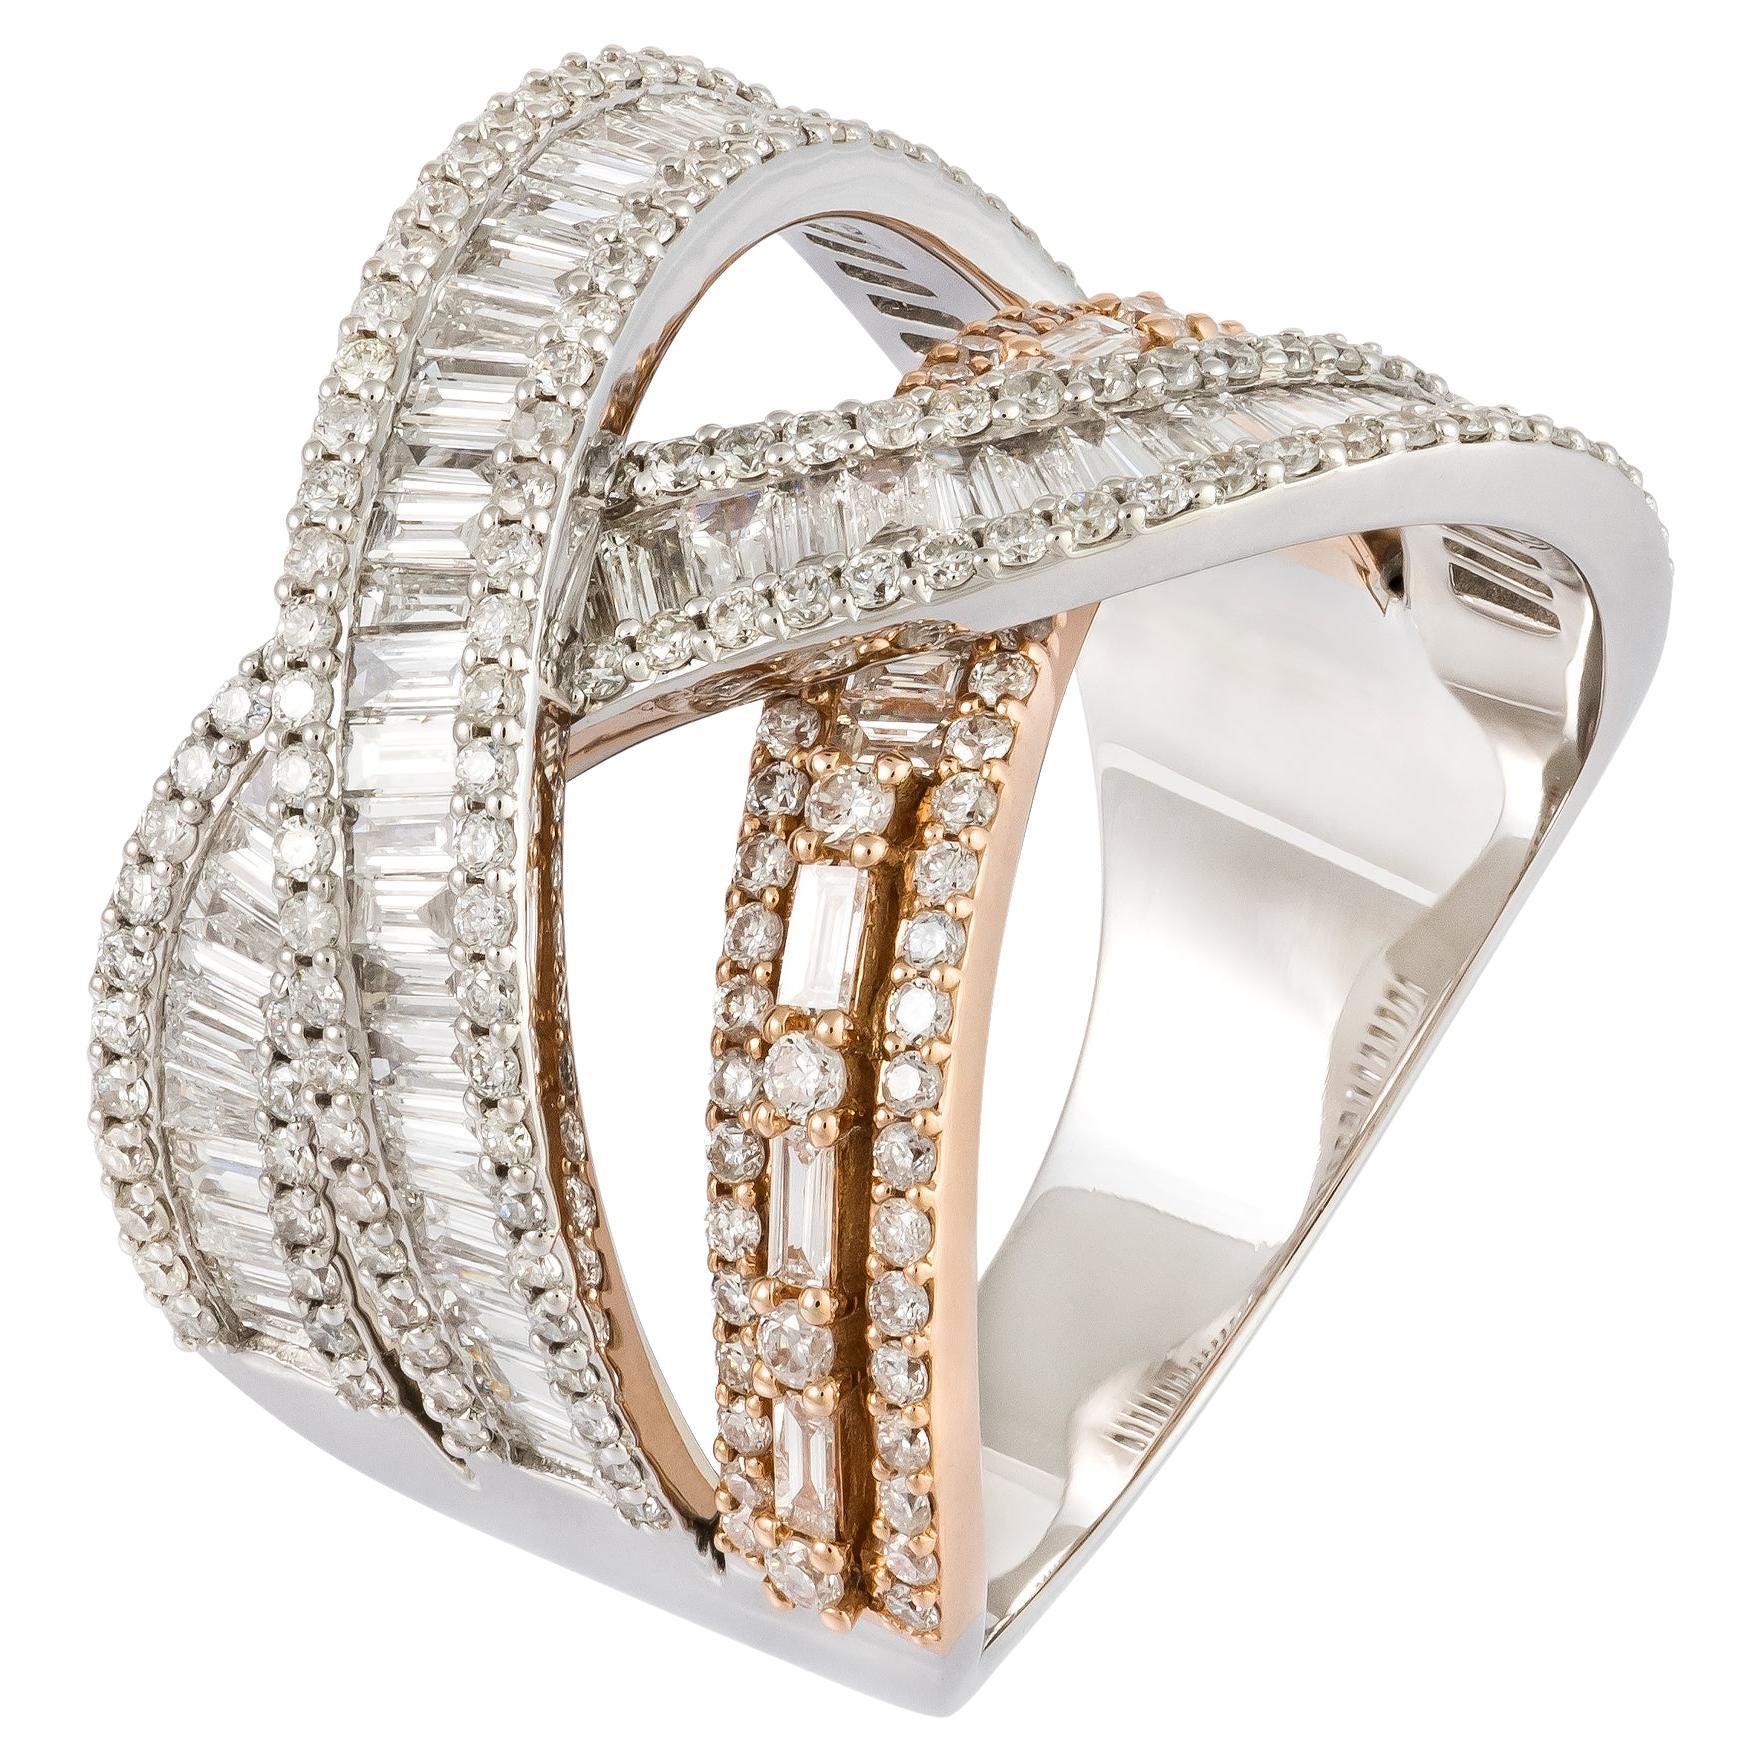 For Sale:  Impressive White Pink 18K Gold White Diamond Ring for Her